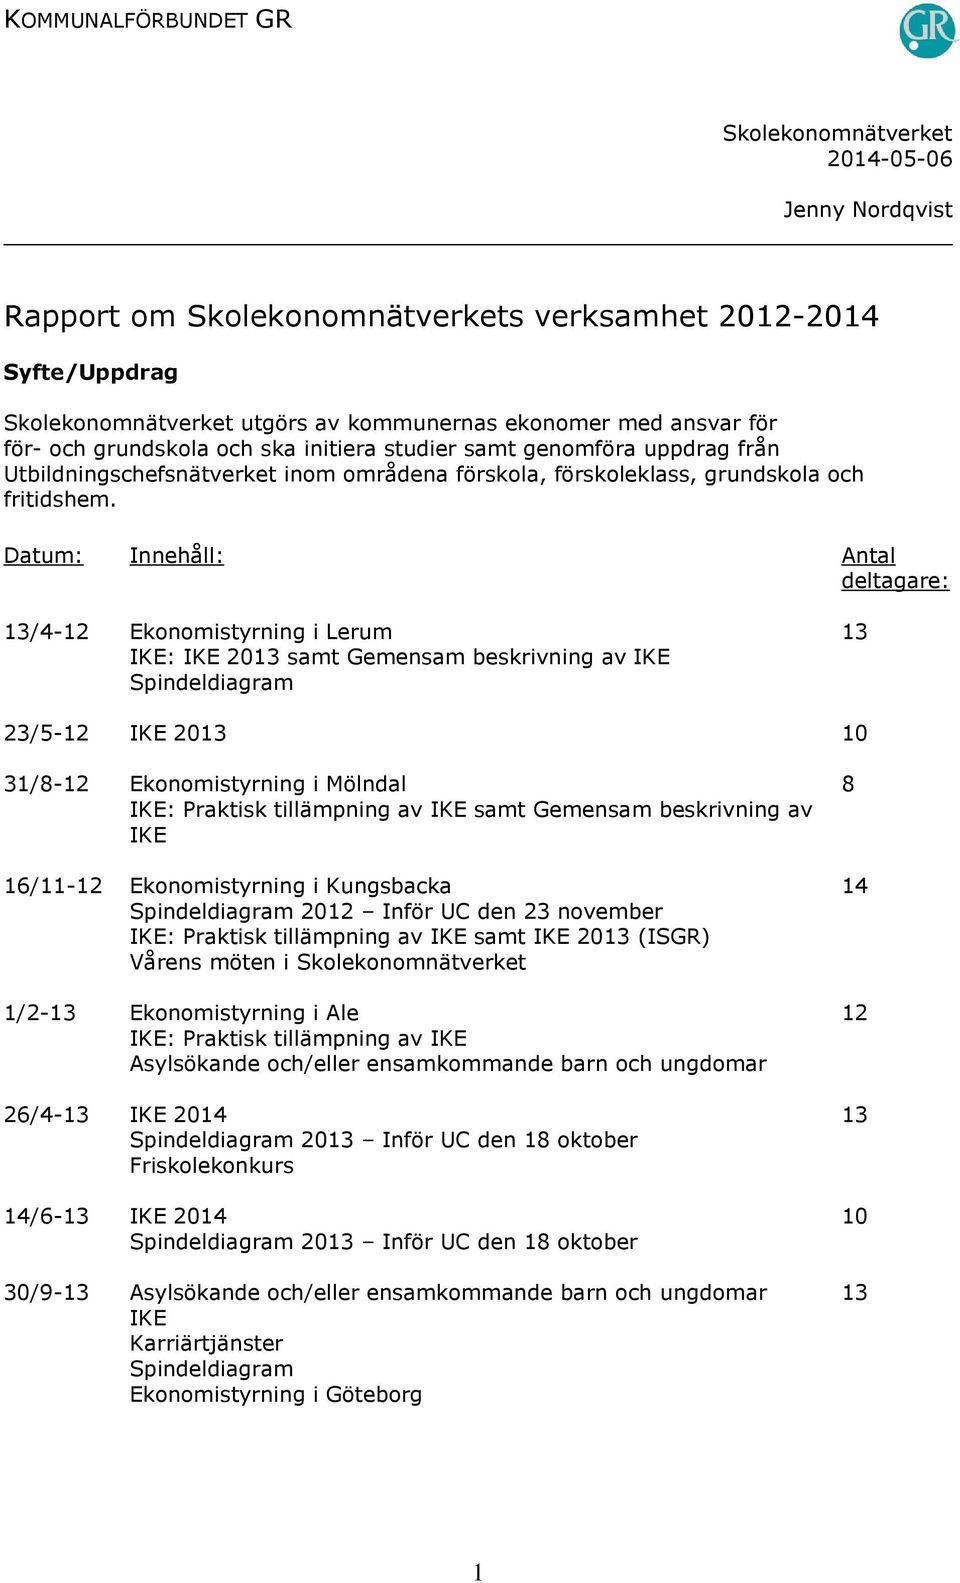 Datum: Innehåll: Antal deltagare: 13/4-12 Ekonomistyrning i Lerum IKE: IKE 2013 samt Gemensam beskrivning av IKE Spindeldiagram 13 23/5-12 IKE 2013 10 31/8-12 Ekonomistyrning i Mölndal IKE: Praktisk